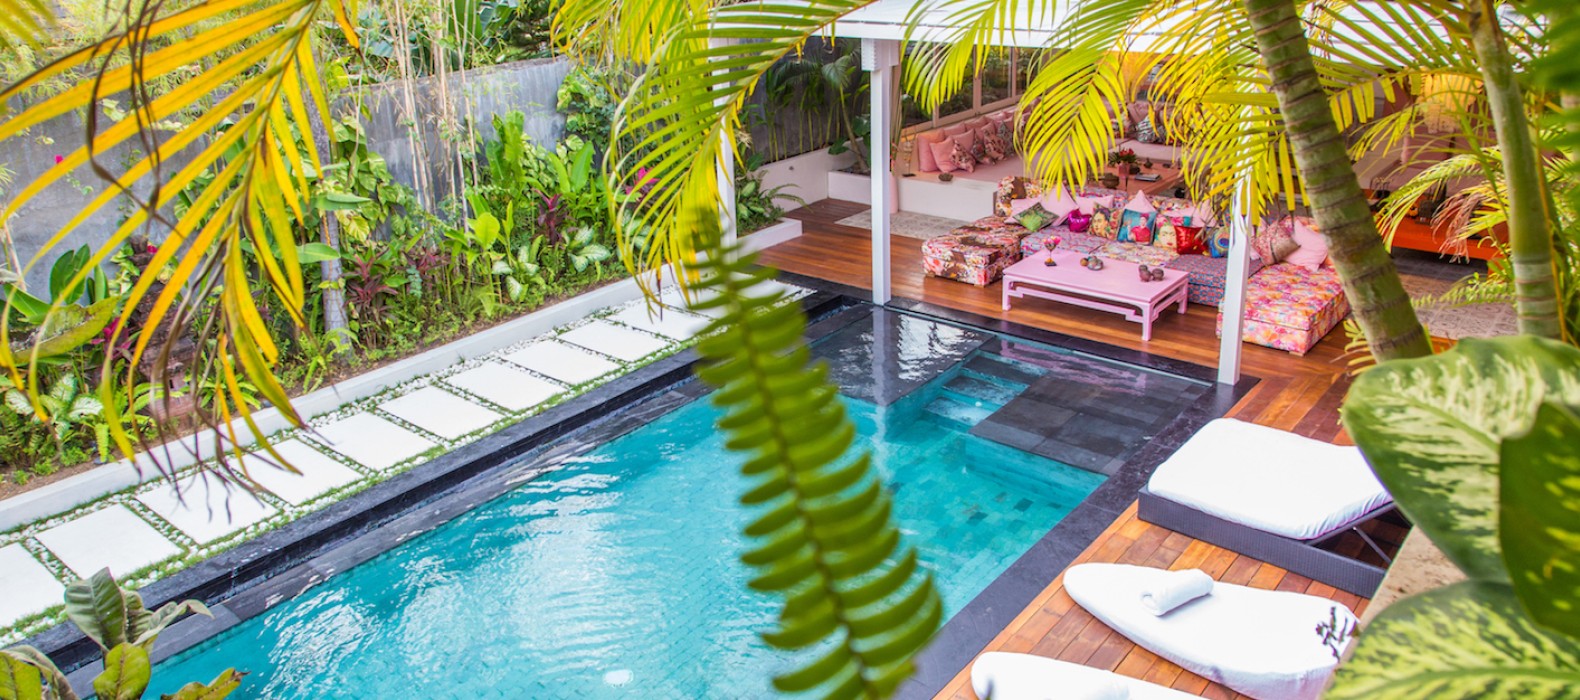 Exterior pool area of Villa Tulu in Bali